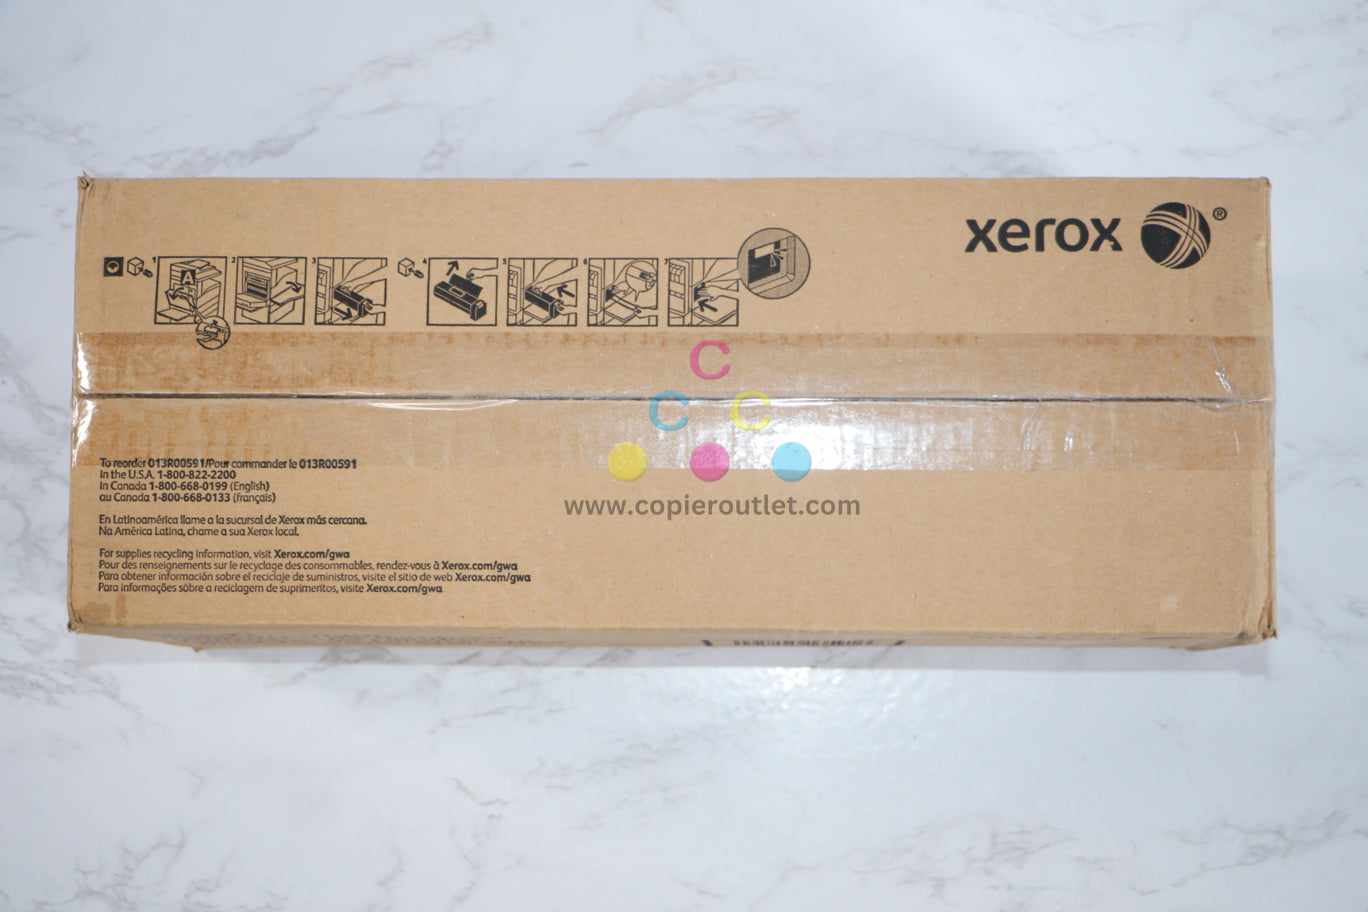 New Genuine Xerox 013R00591 Black Drum Unit WorkCentre 5325 5330 5335 Same Day Ship!